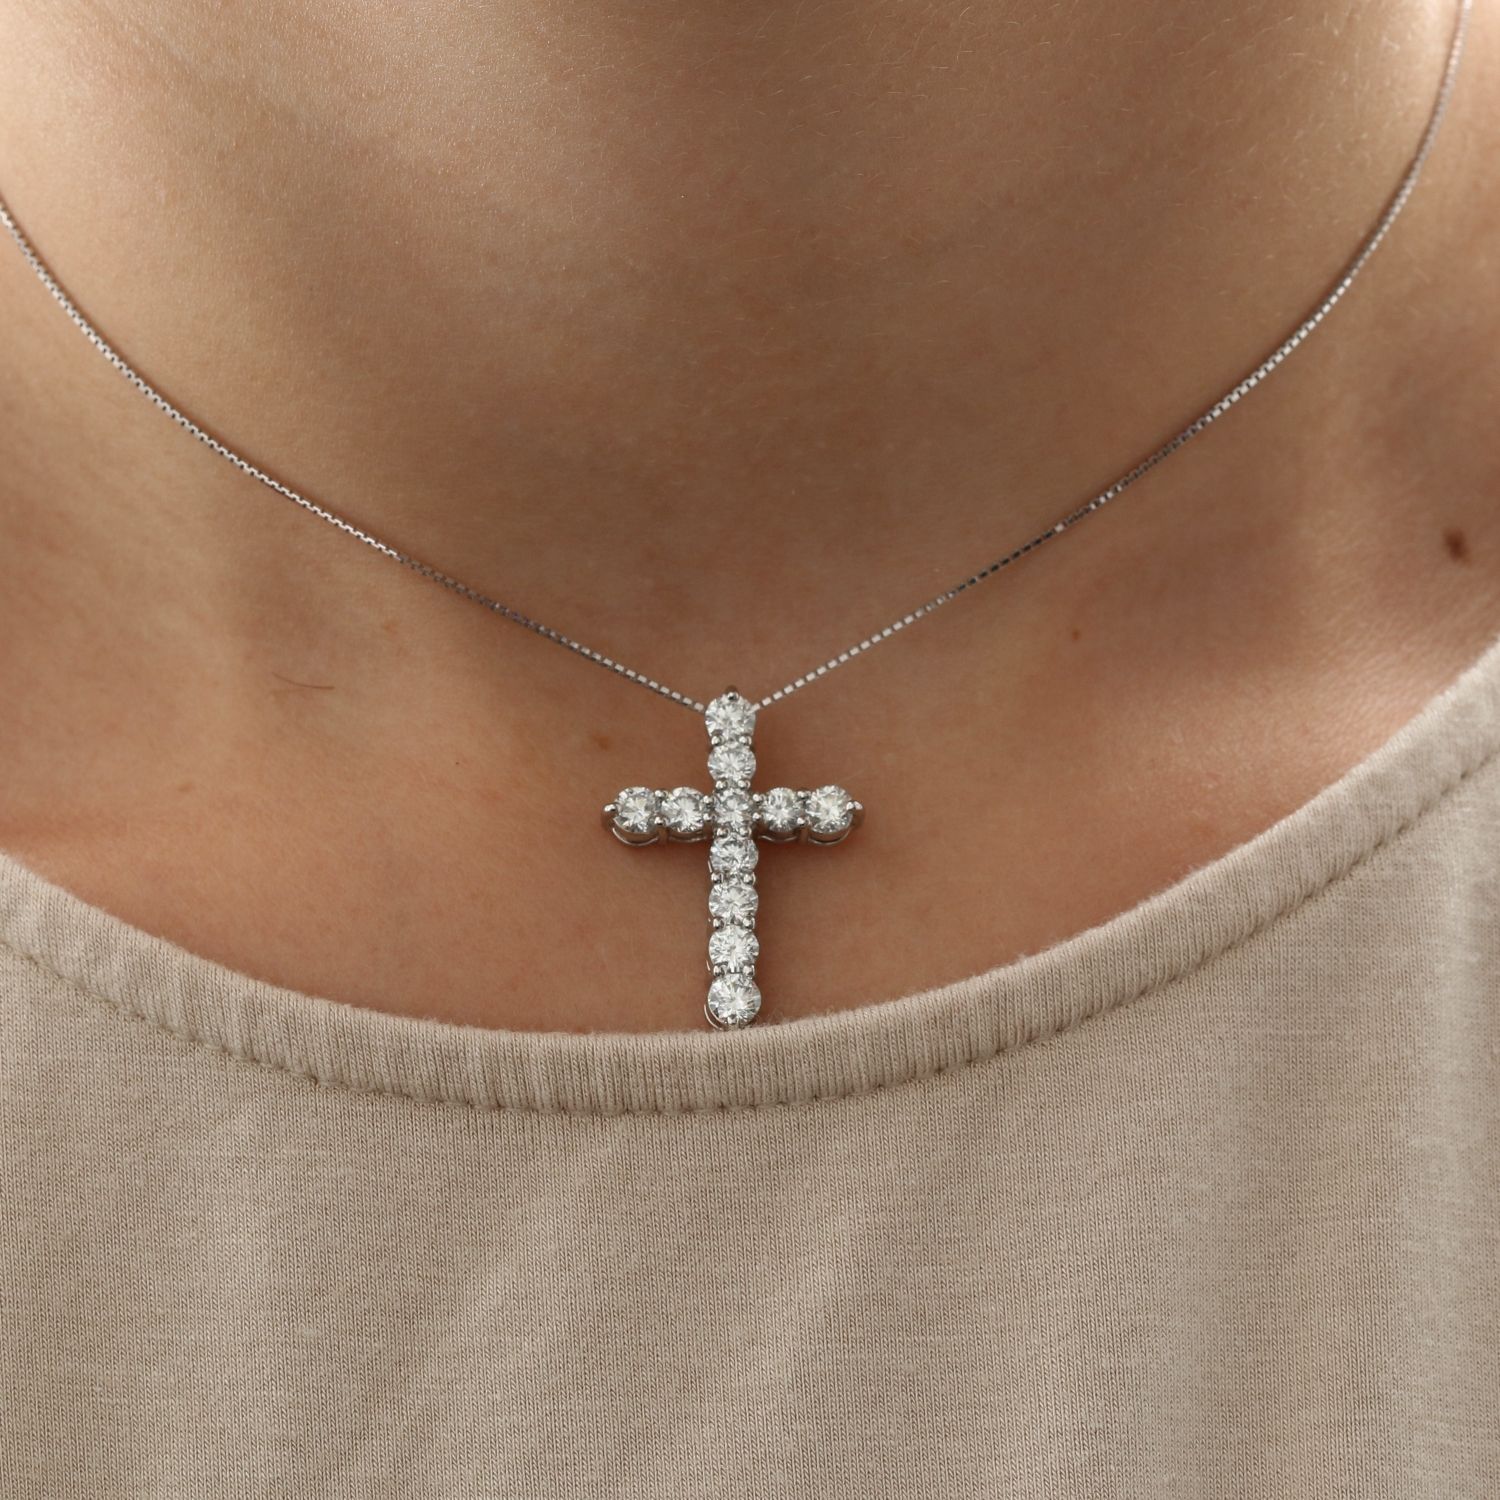 Diamond cross pendant